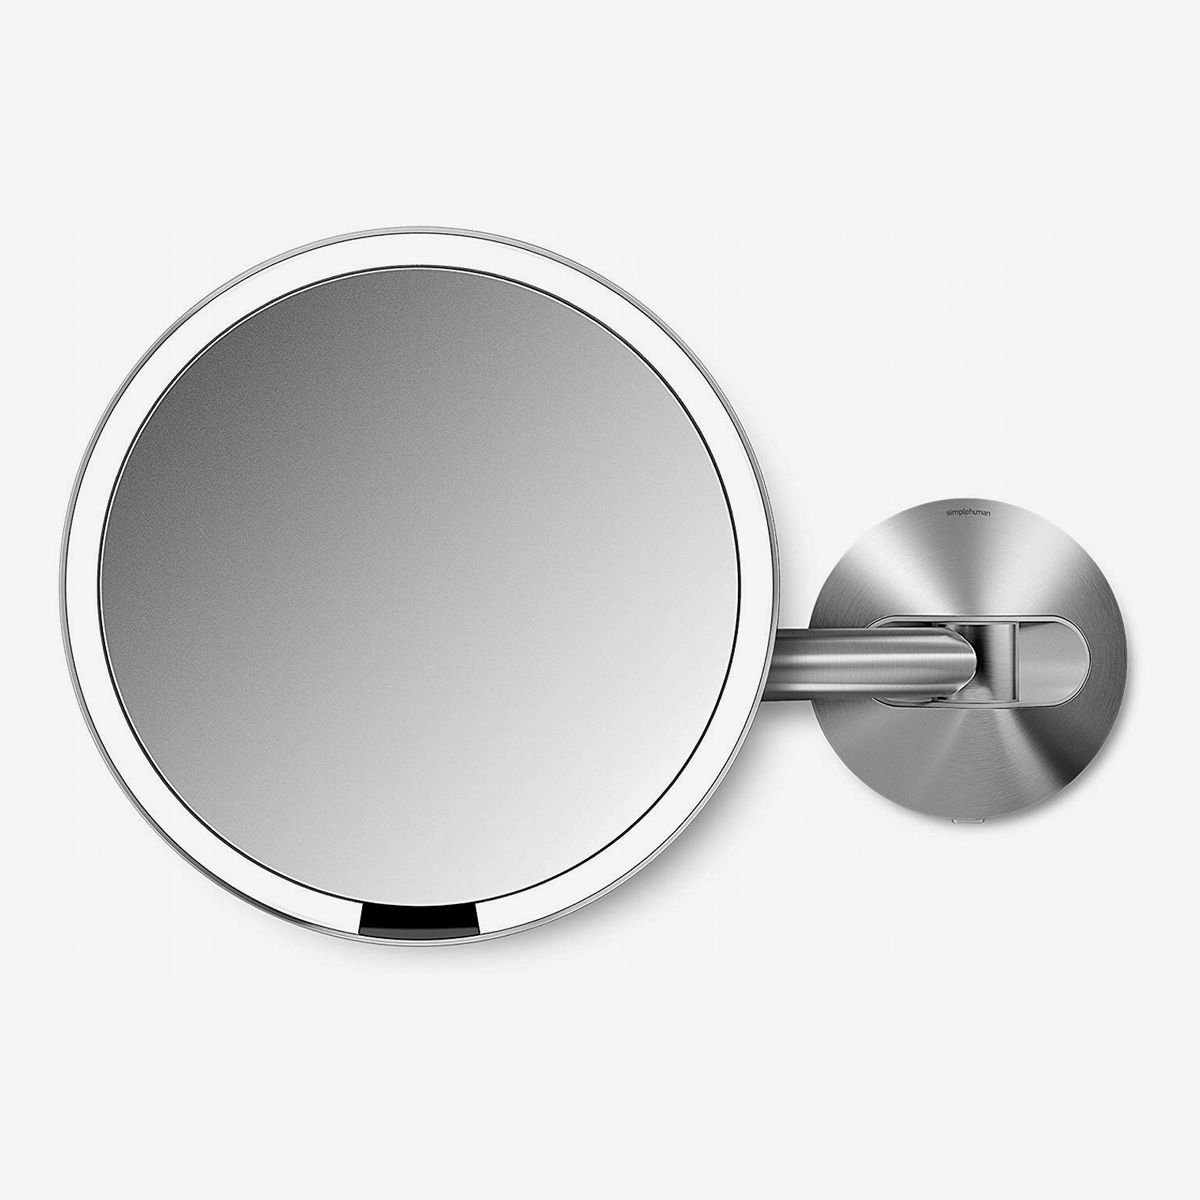 14 Best Lighted Makeup Mirrors 2021, Best Lighted Makeup Mirror 2021